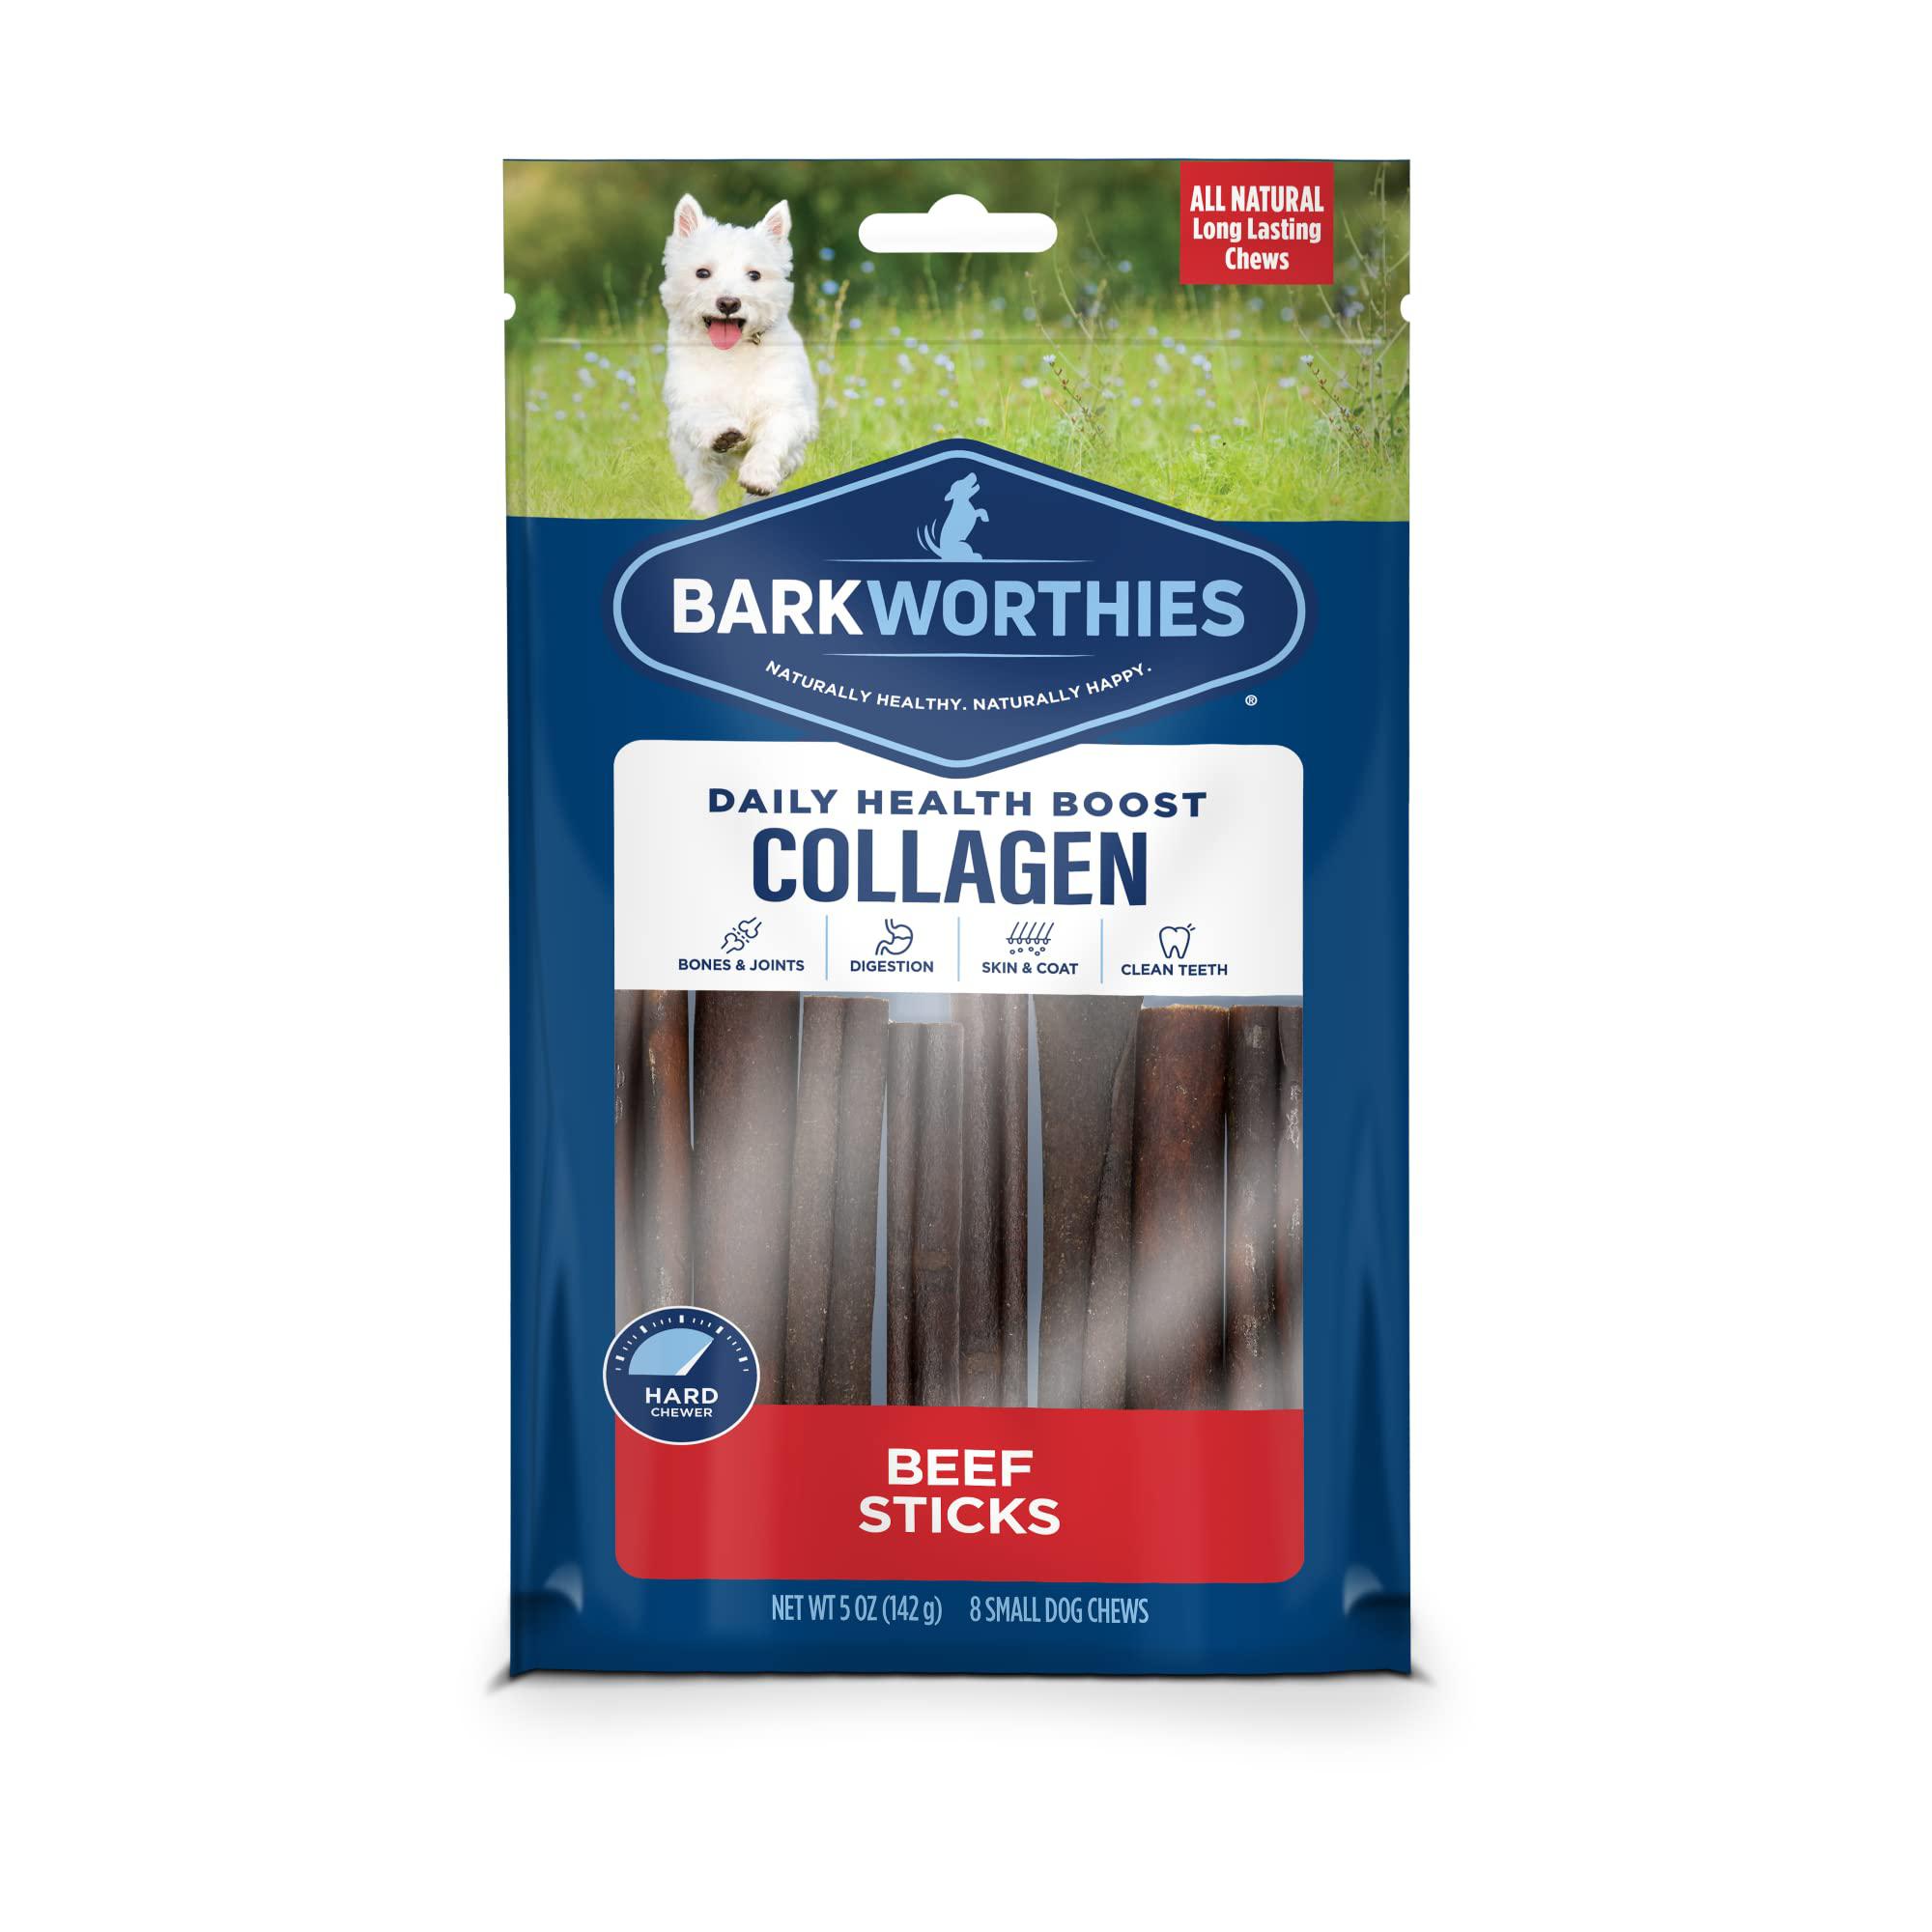 barkworthies chicken wrapped collagen sticks dog treats, 6-inch, 8-count